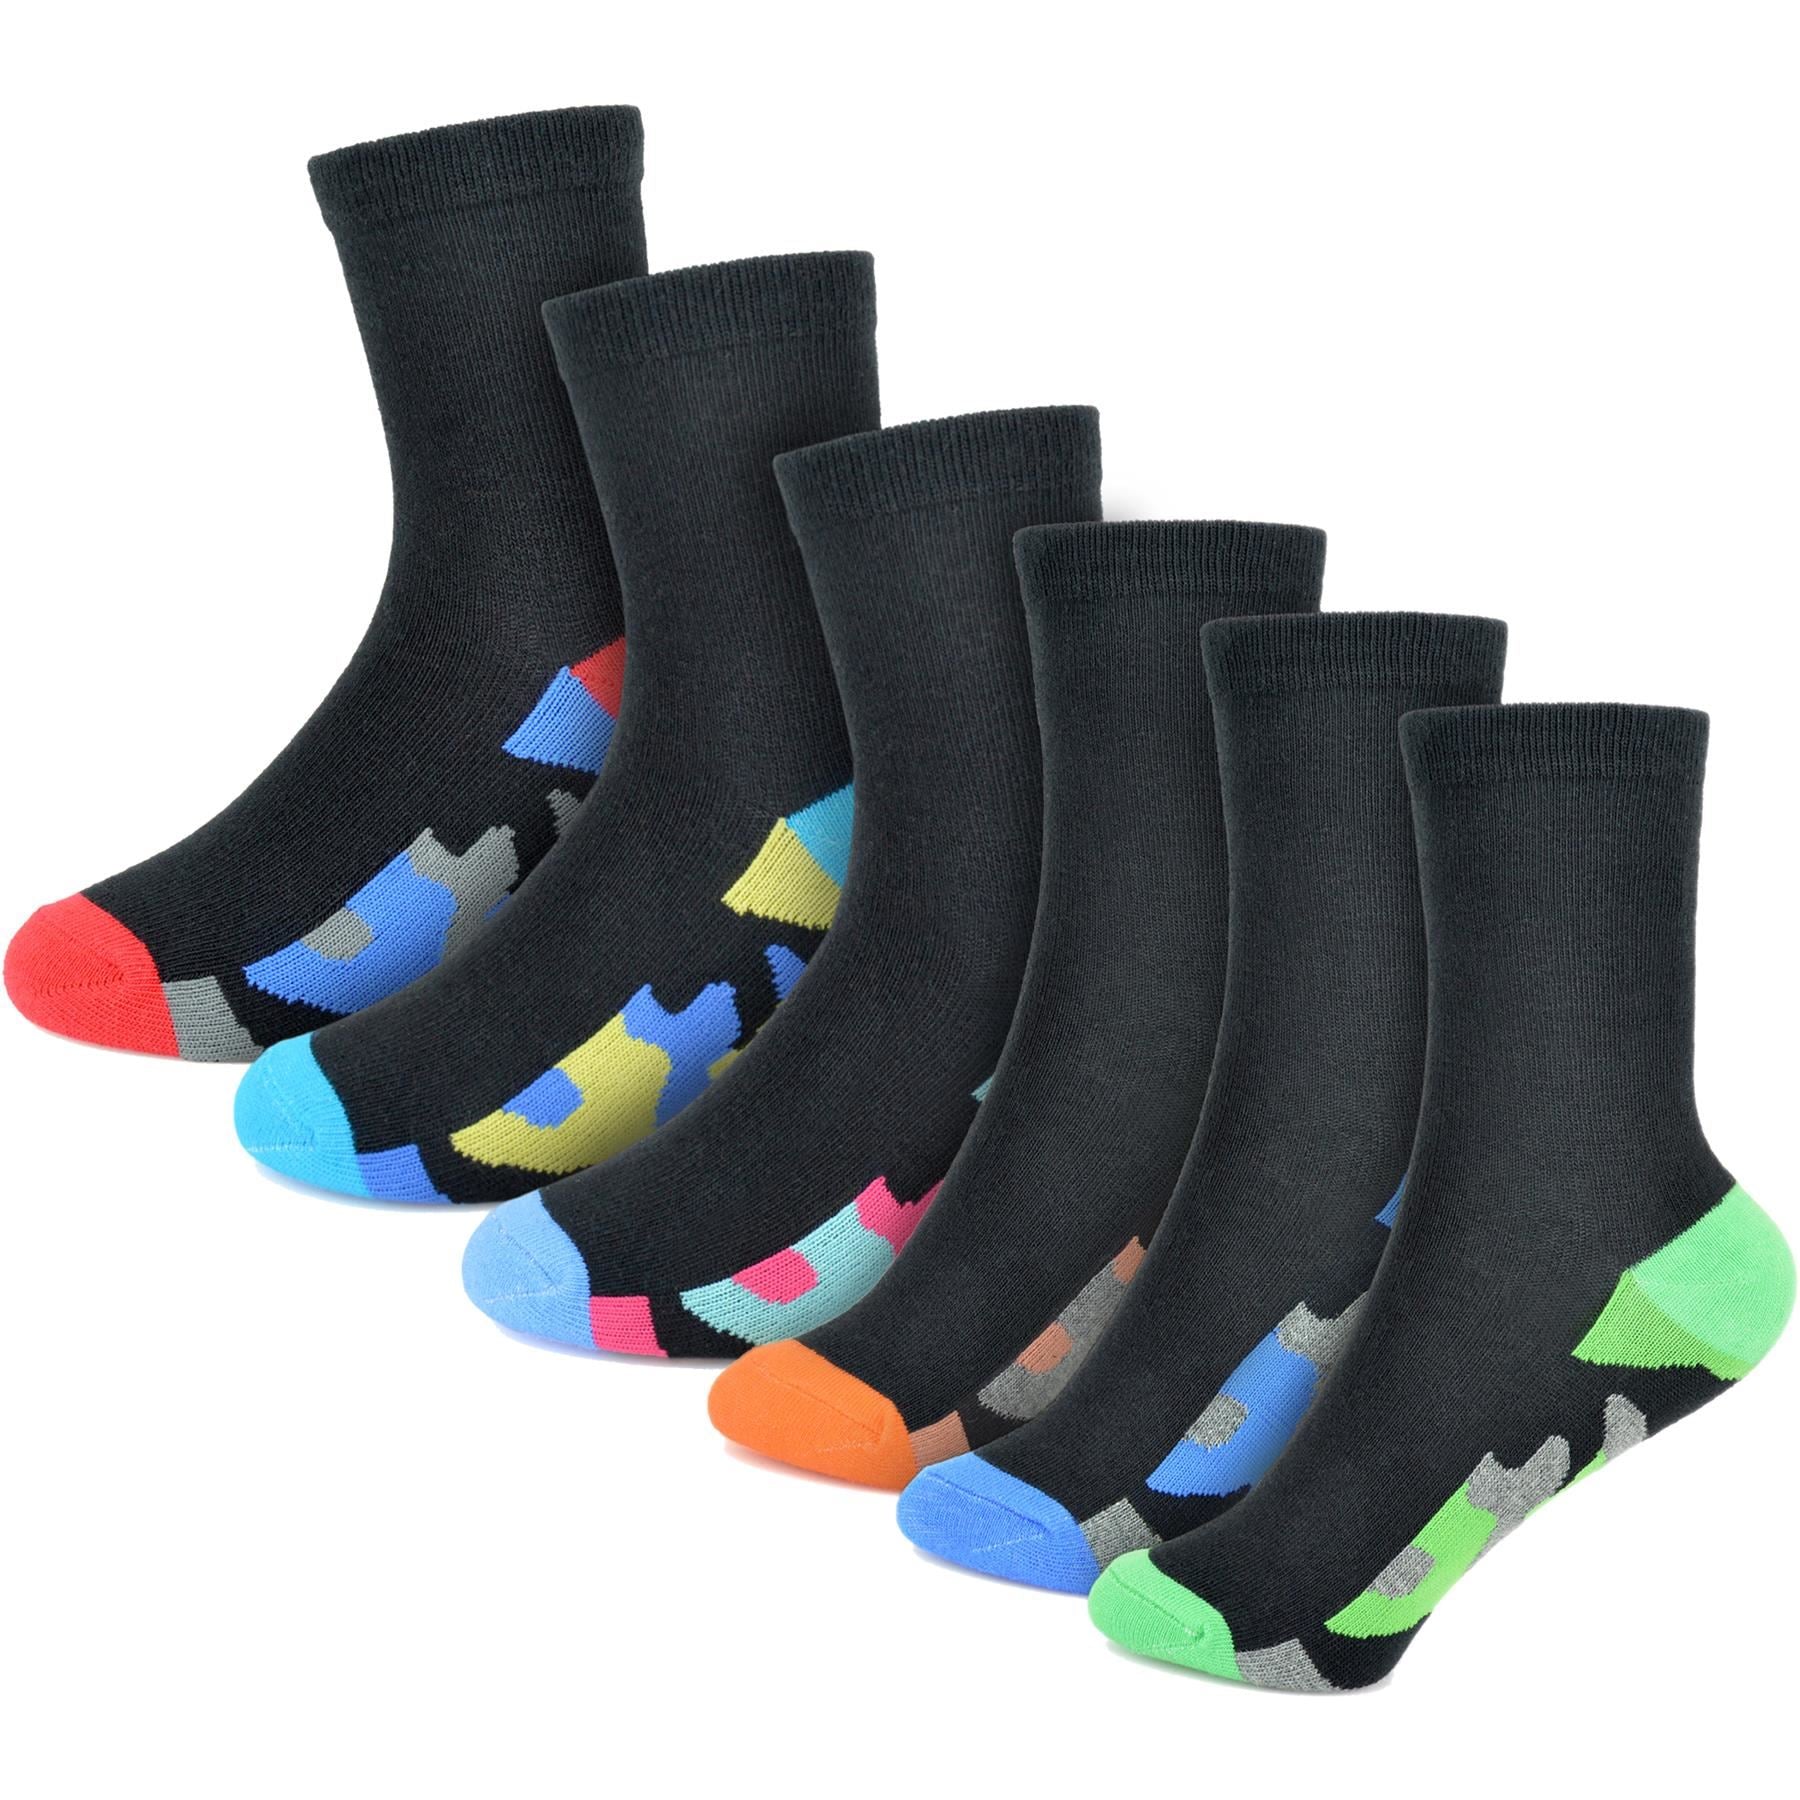 Kids Boys Camouflage Heel & Toe Socks Black Camo Socks Pack of 3 Kids Footwear